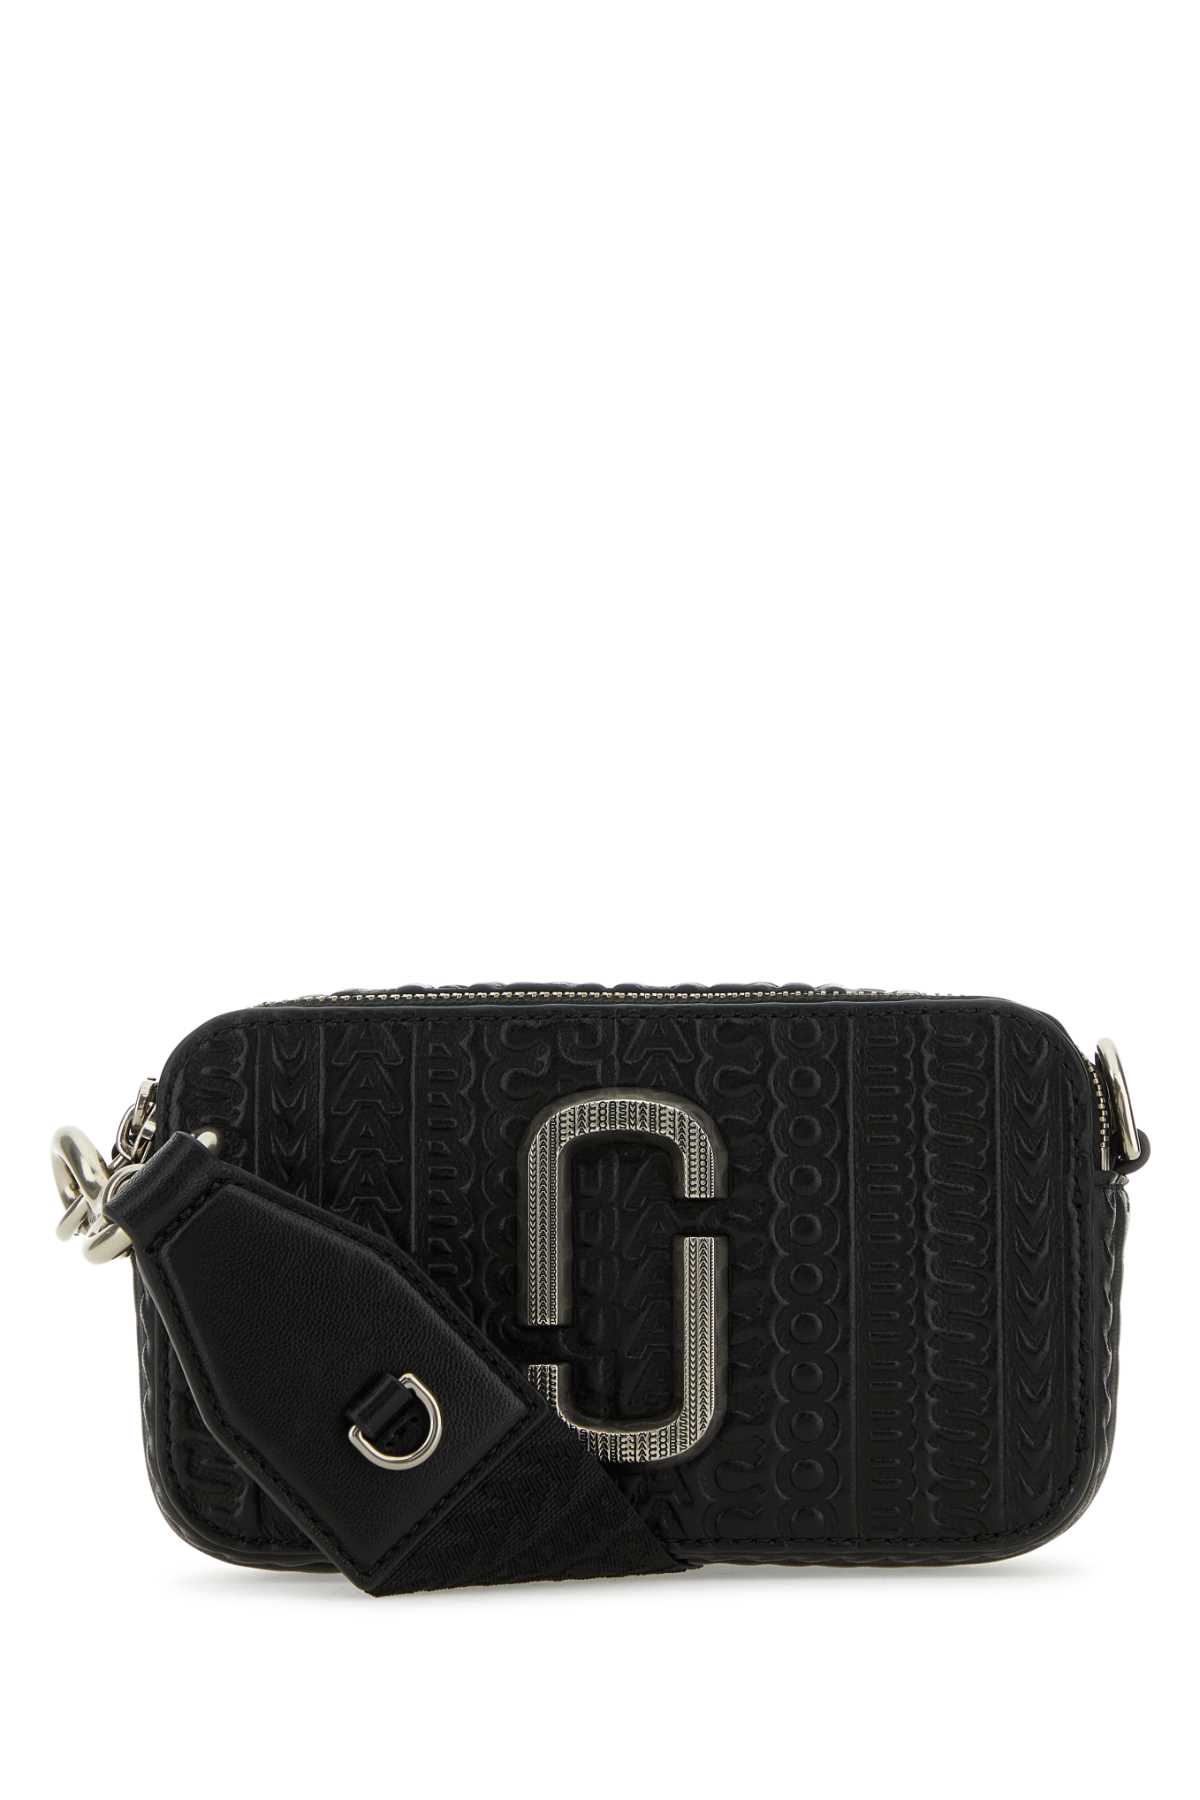 Shop Marc Jacobs Black Leather The Snapshot Crossbody Bag